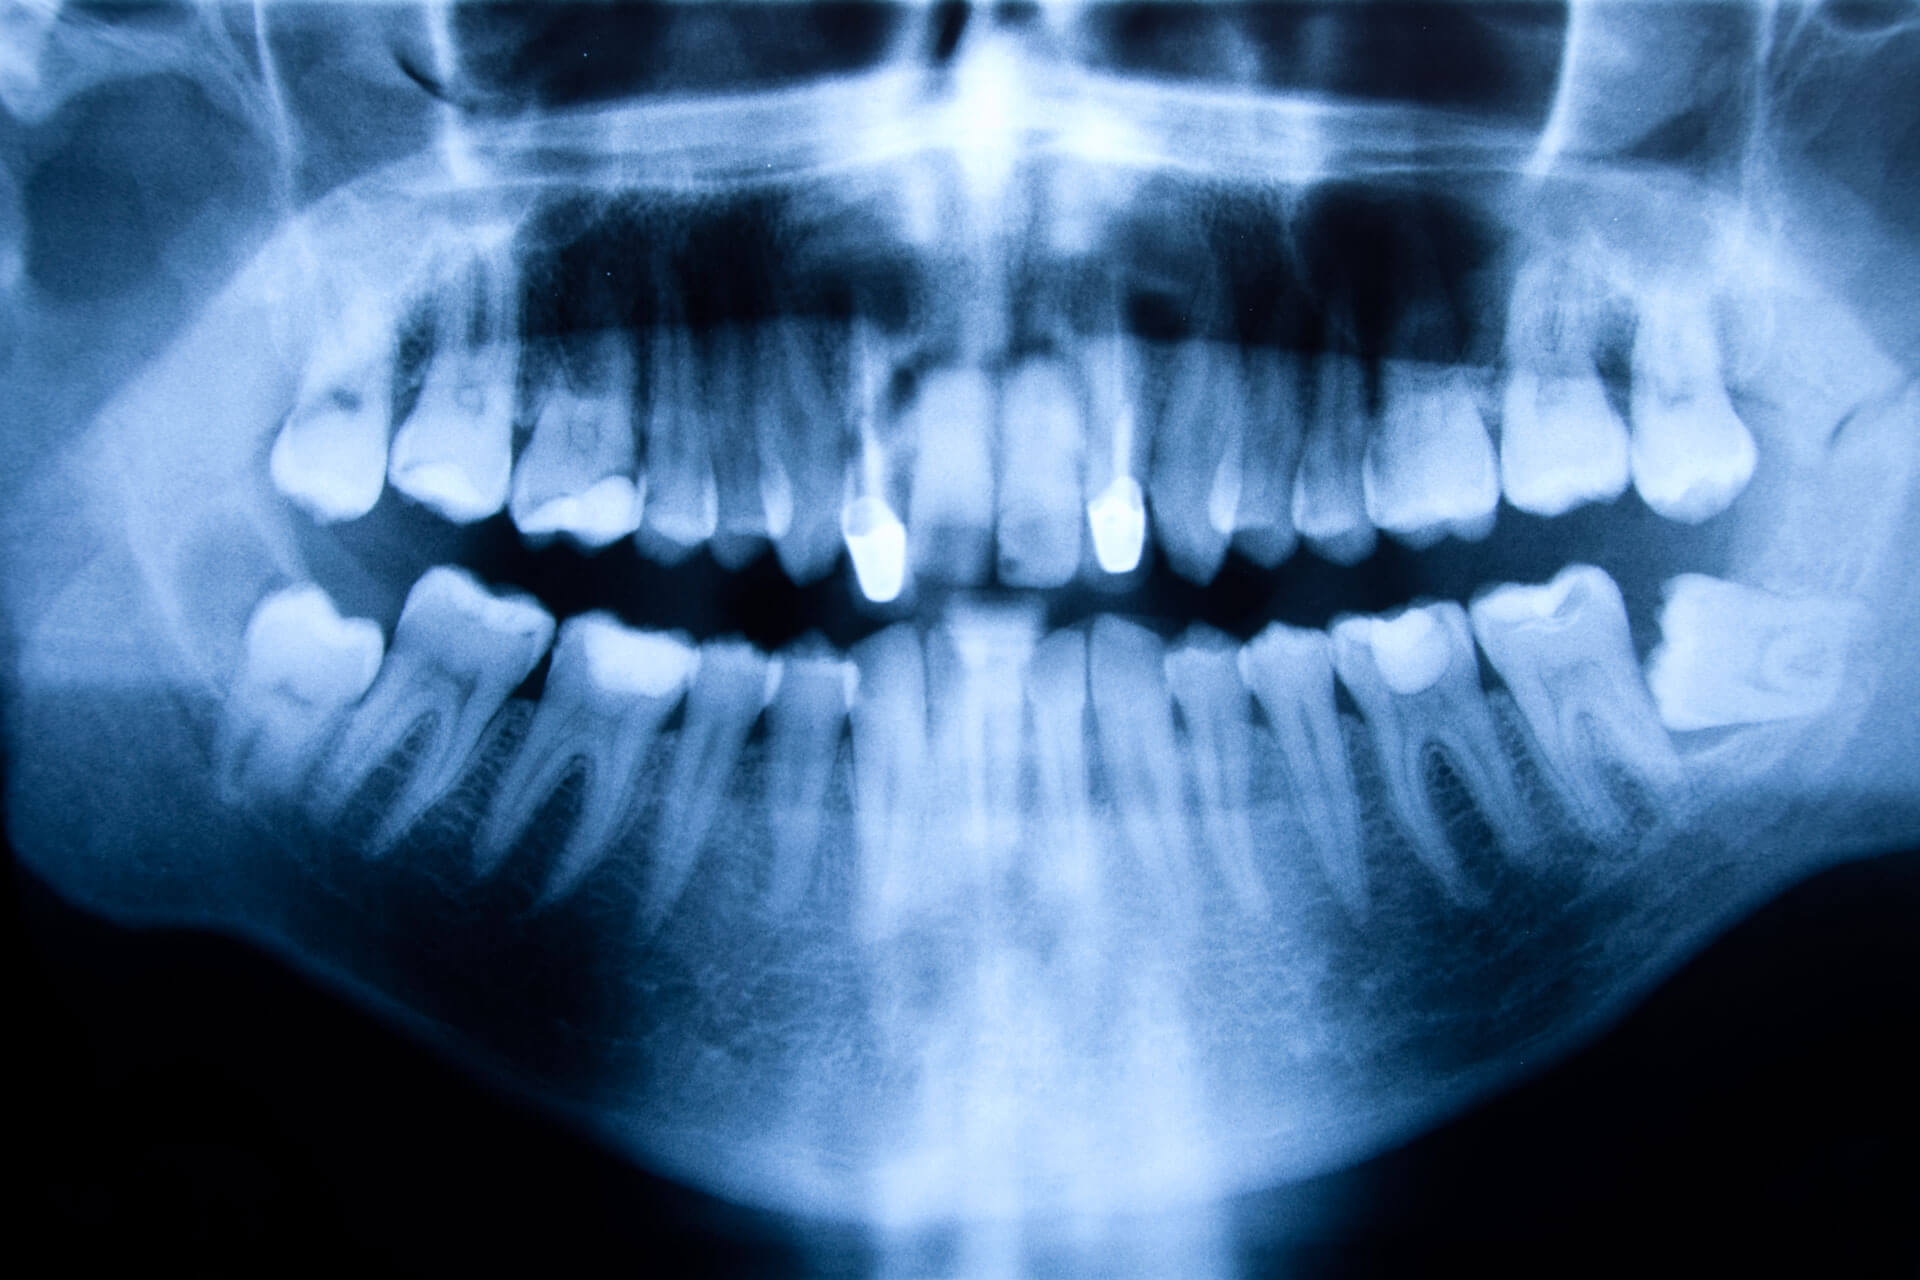 ciste dentale panoramica a raggi X